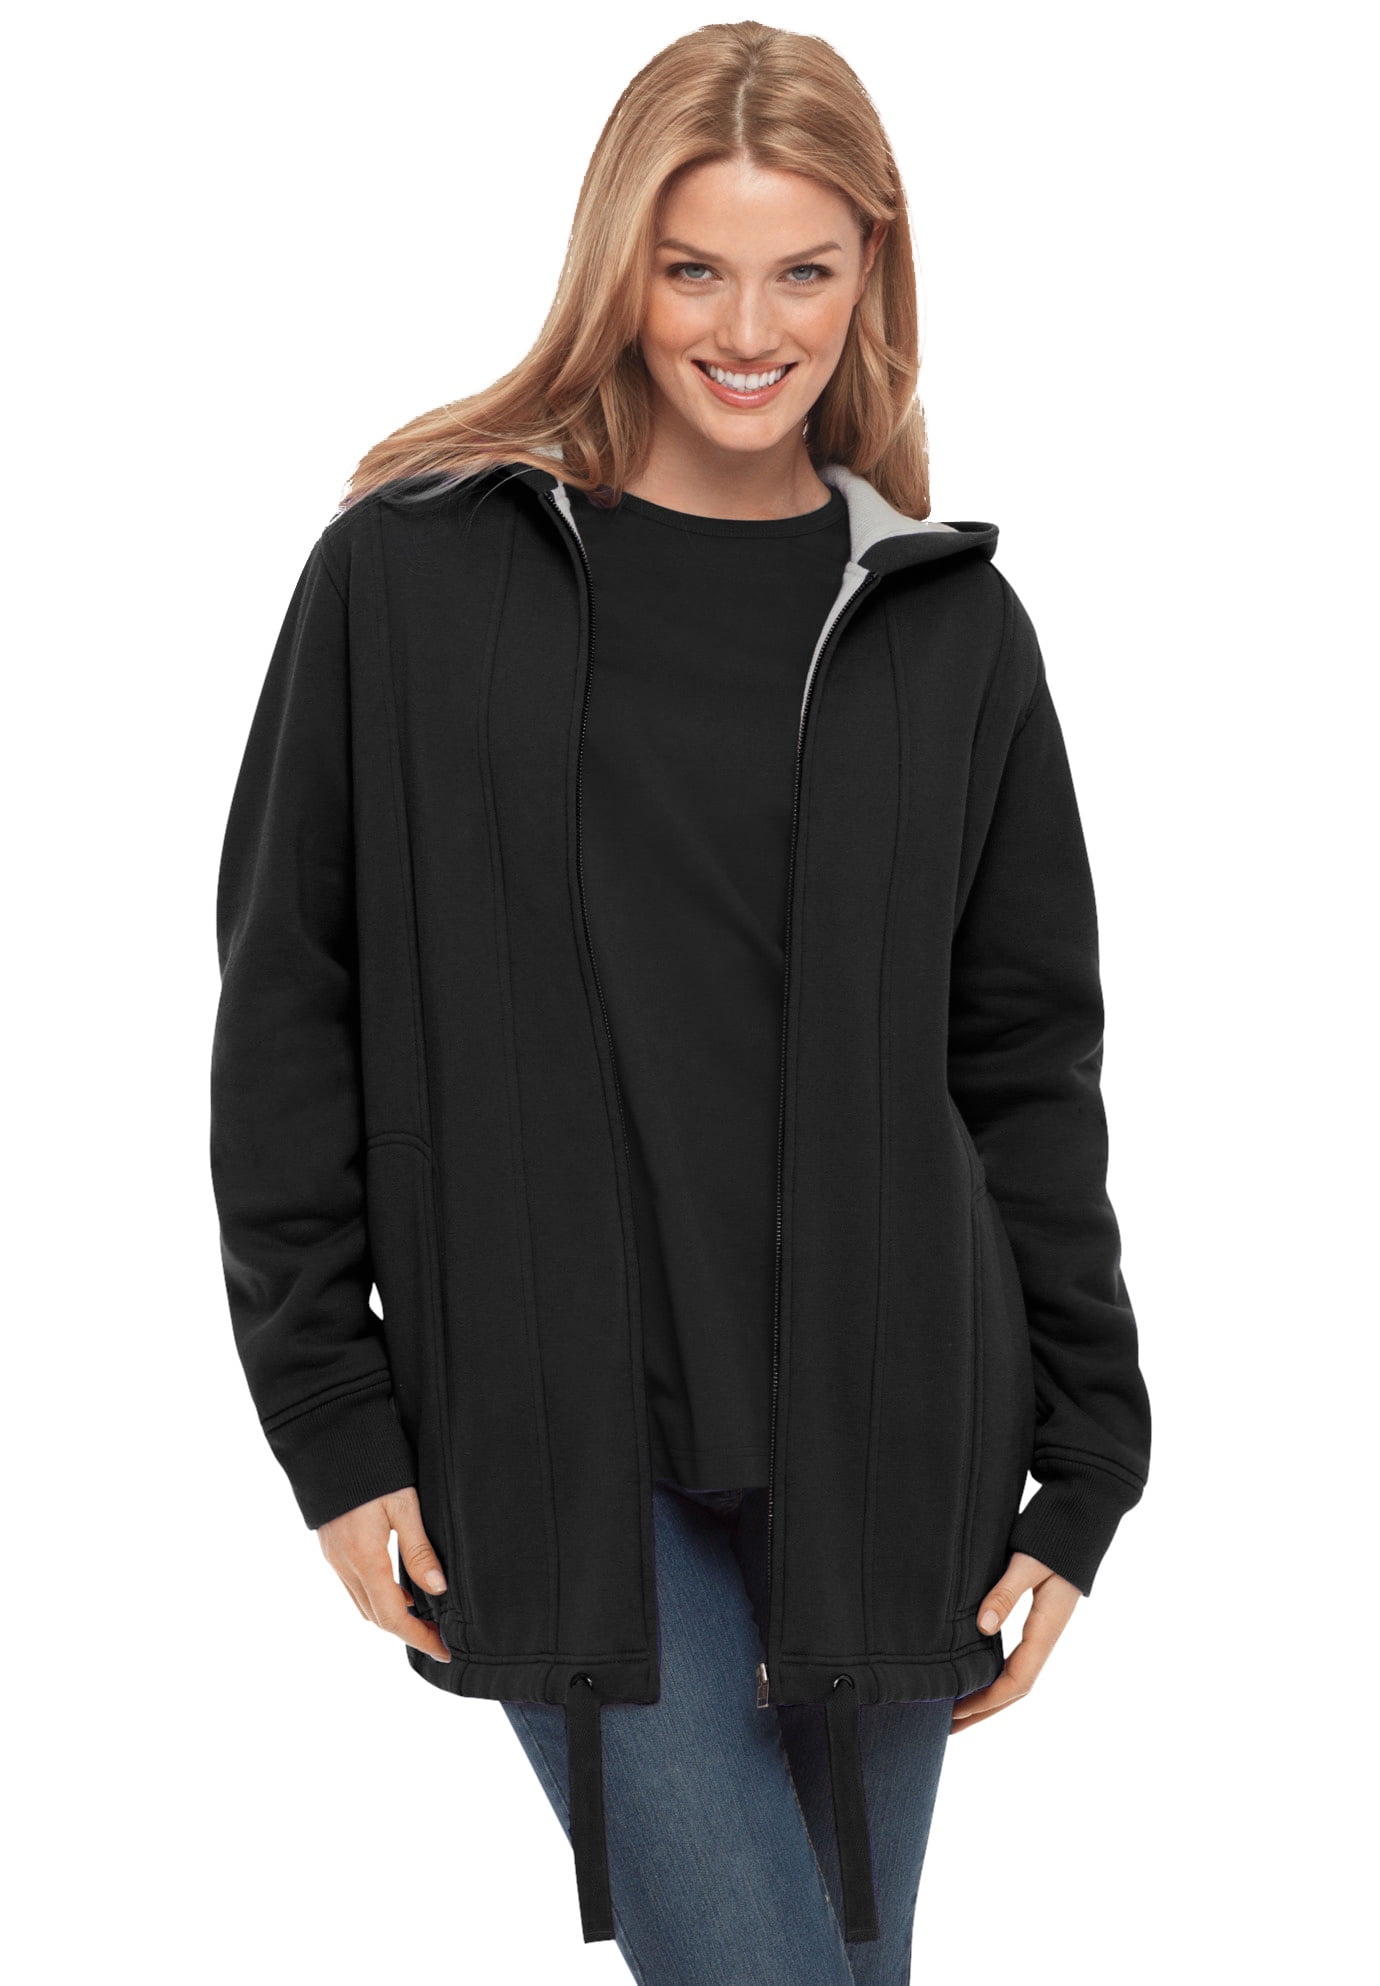 Ladies Hoody Jacket Womens Plain Colour Zip Up Hoodie Hooded Sweatshirt Fleece Tops UK Plus Size S-5XL